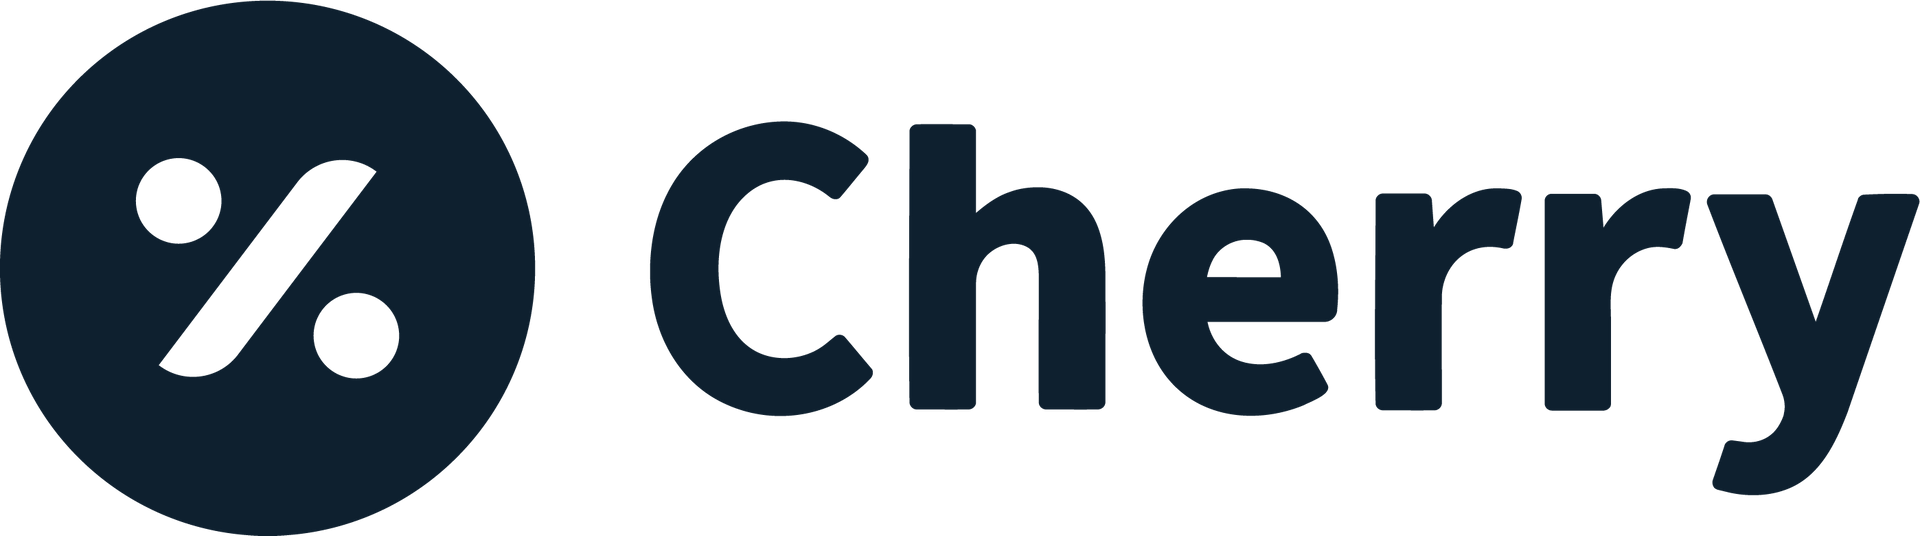 Cherry financial logo